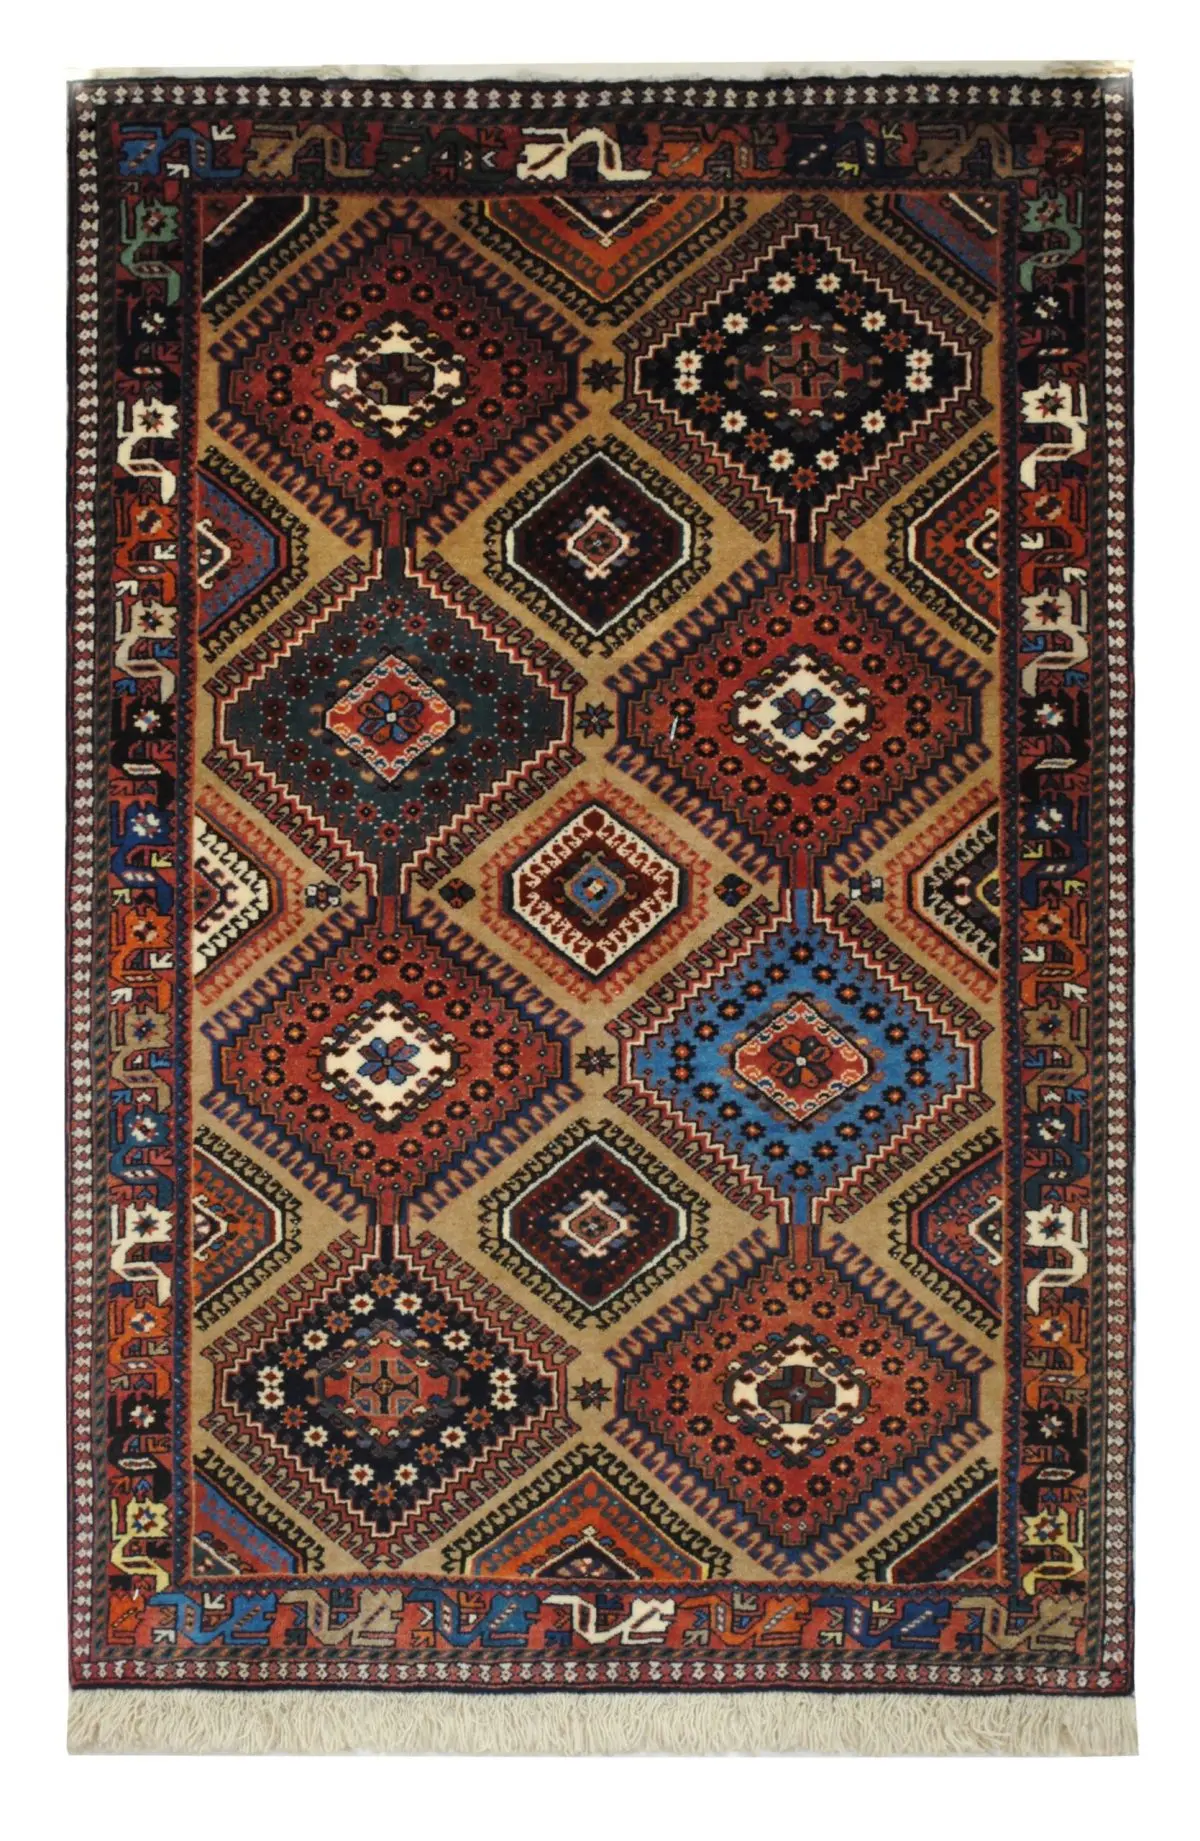 Persian Yallameh rug 3' 5" x 5' 3" Handmade Area Rug - Shabahang Royal Carpet